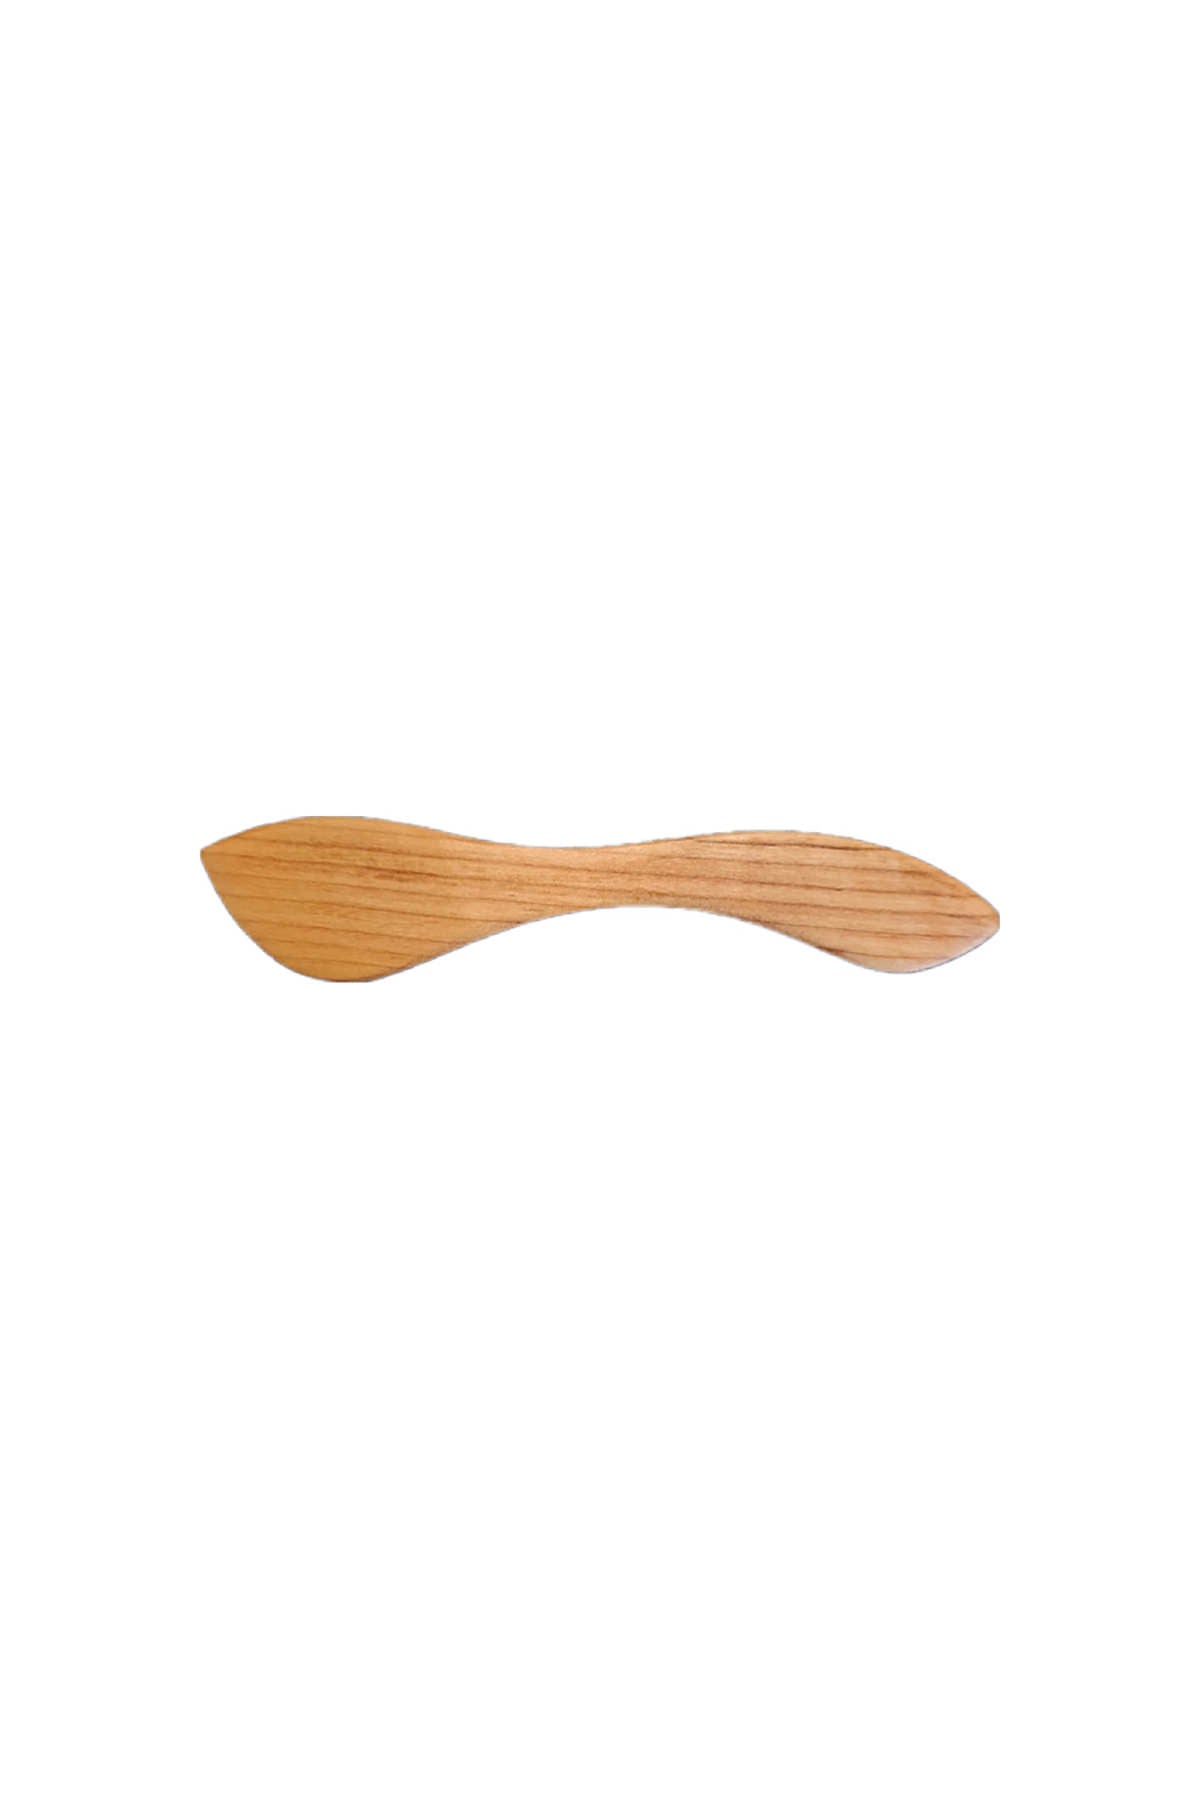 Buttermesser schlicht aus Erlenholz | 18 cm